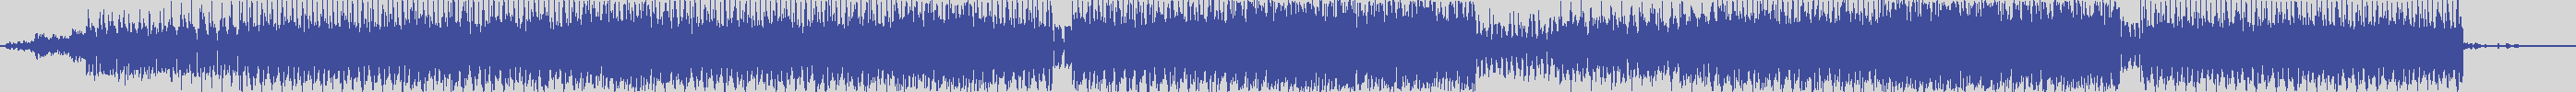 upr [UPR019] Adan, Ilse - Lost Overdrive [Simi Nah, Kgb Rmx] audio wave form